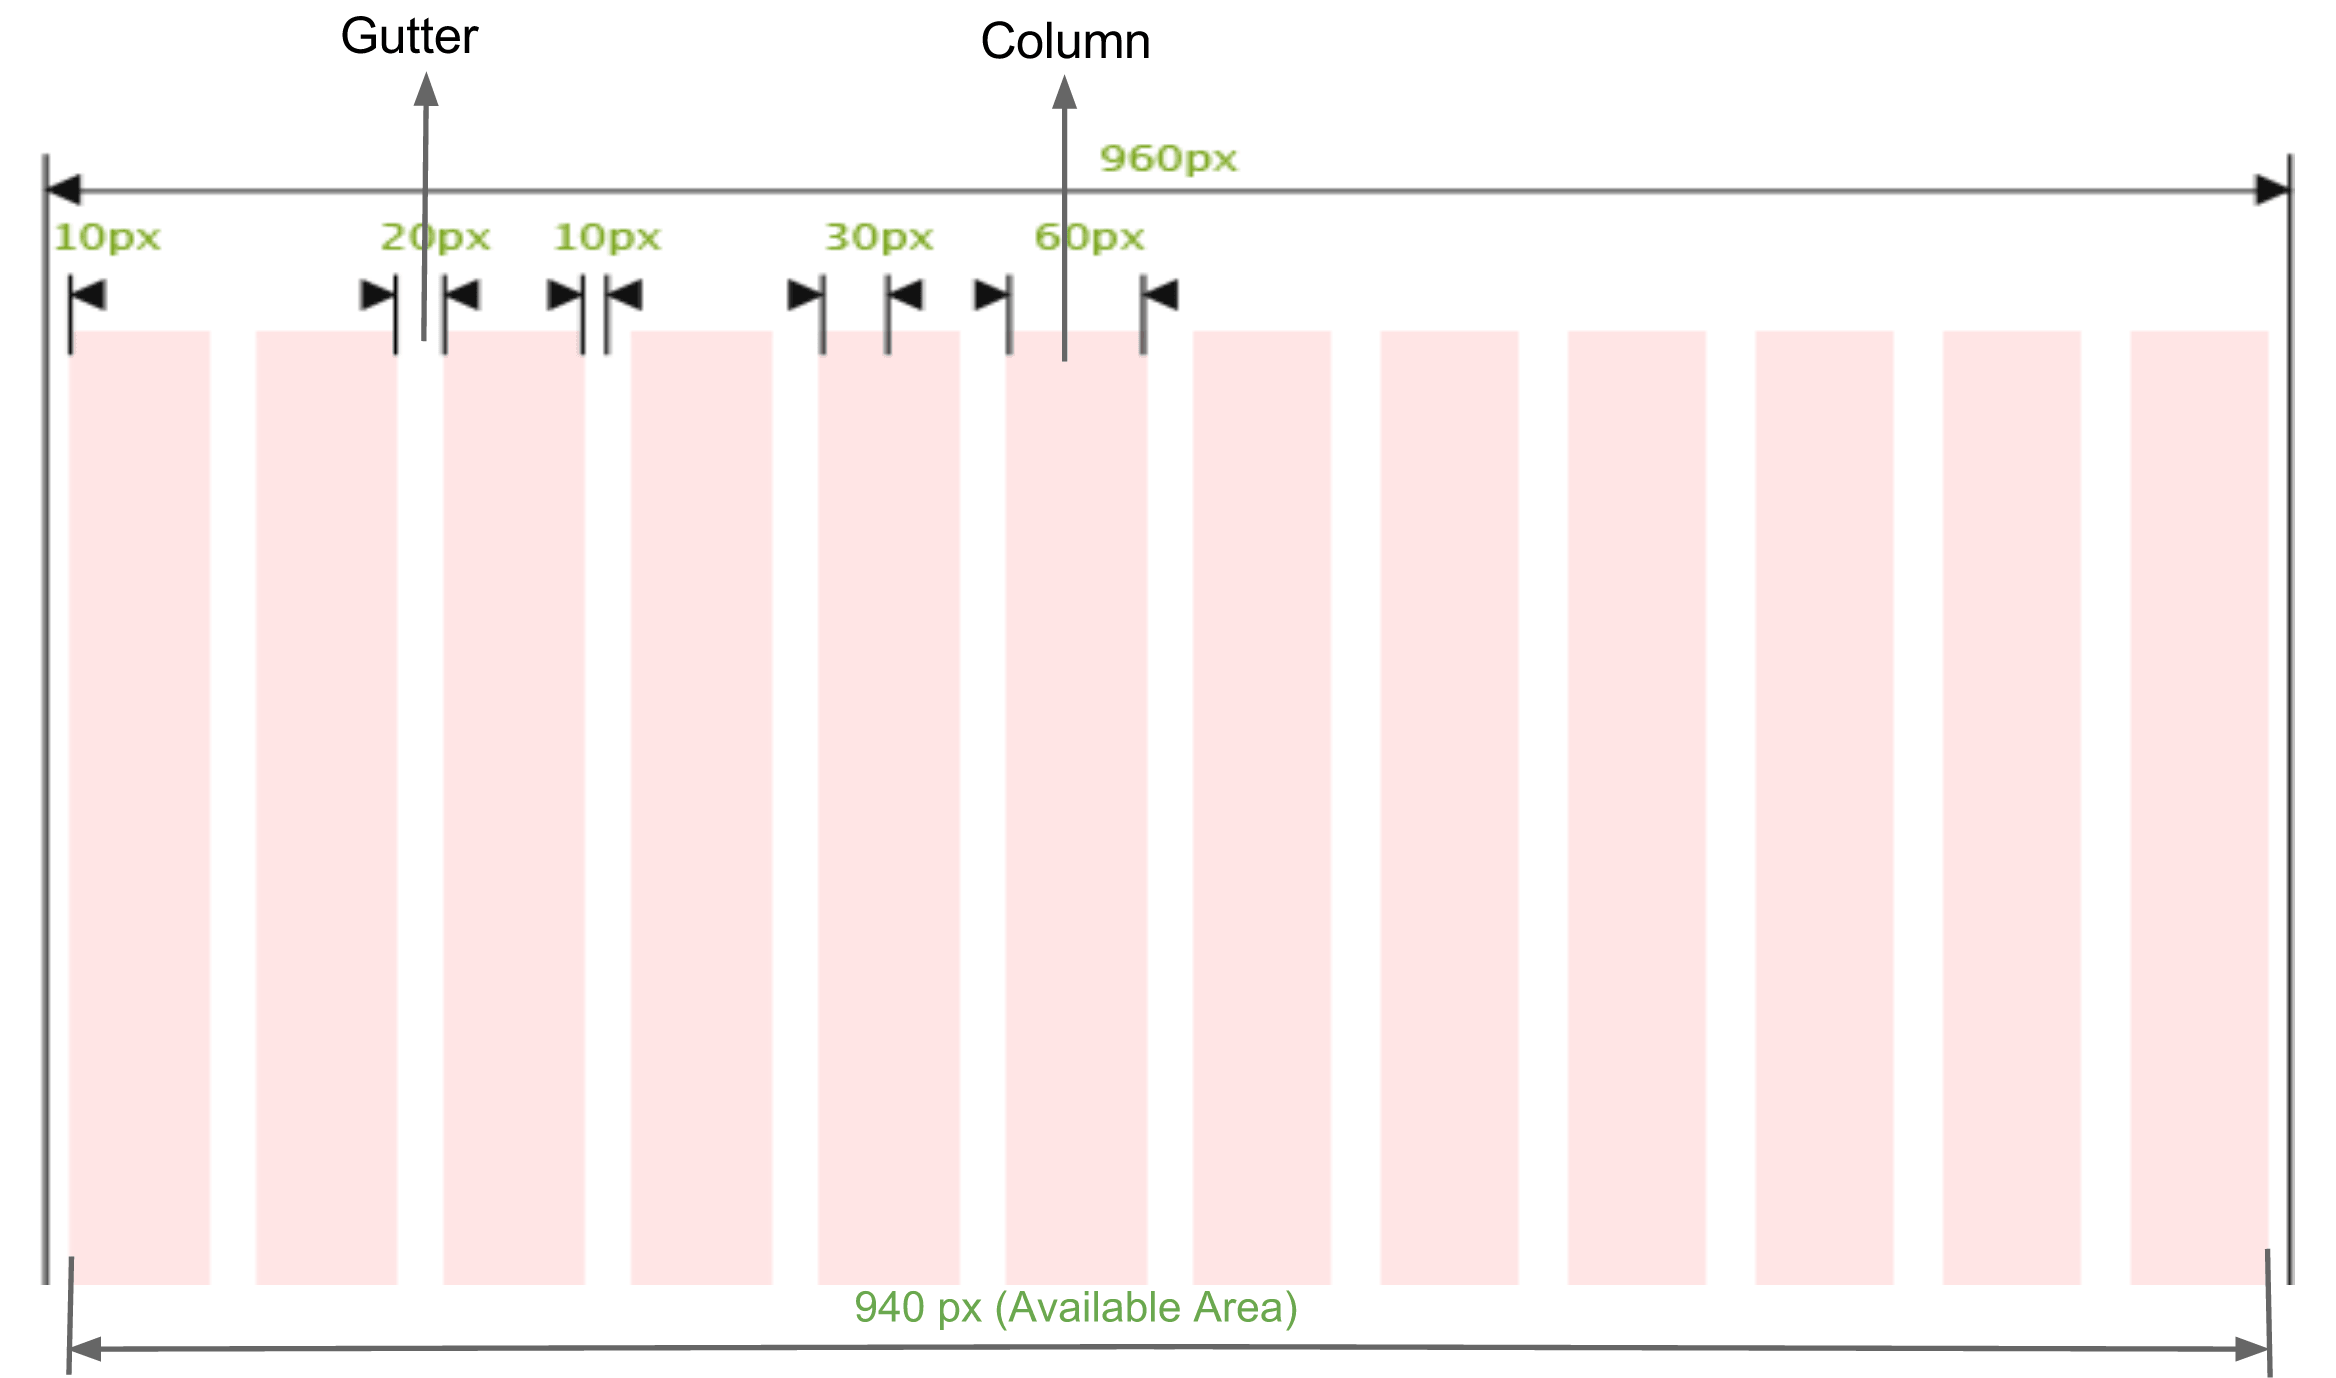 Dynamic Grid Template Columns